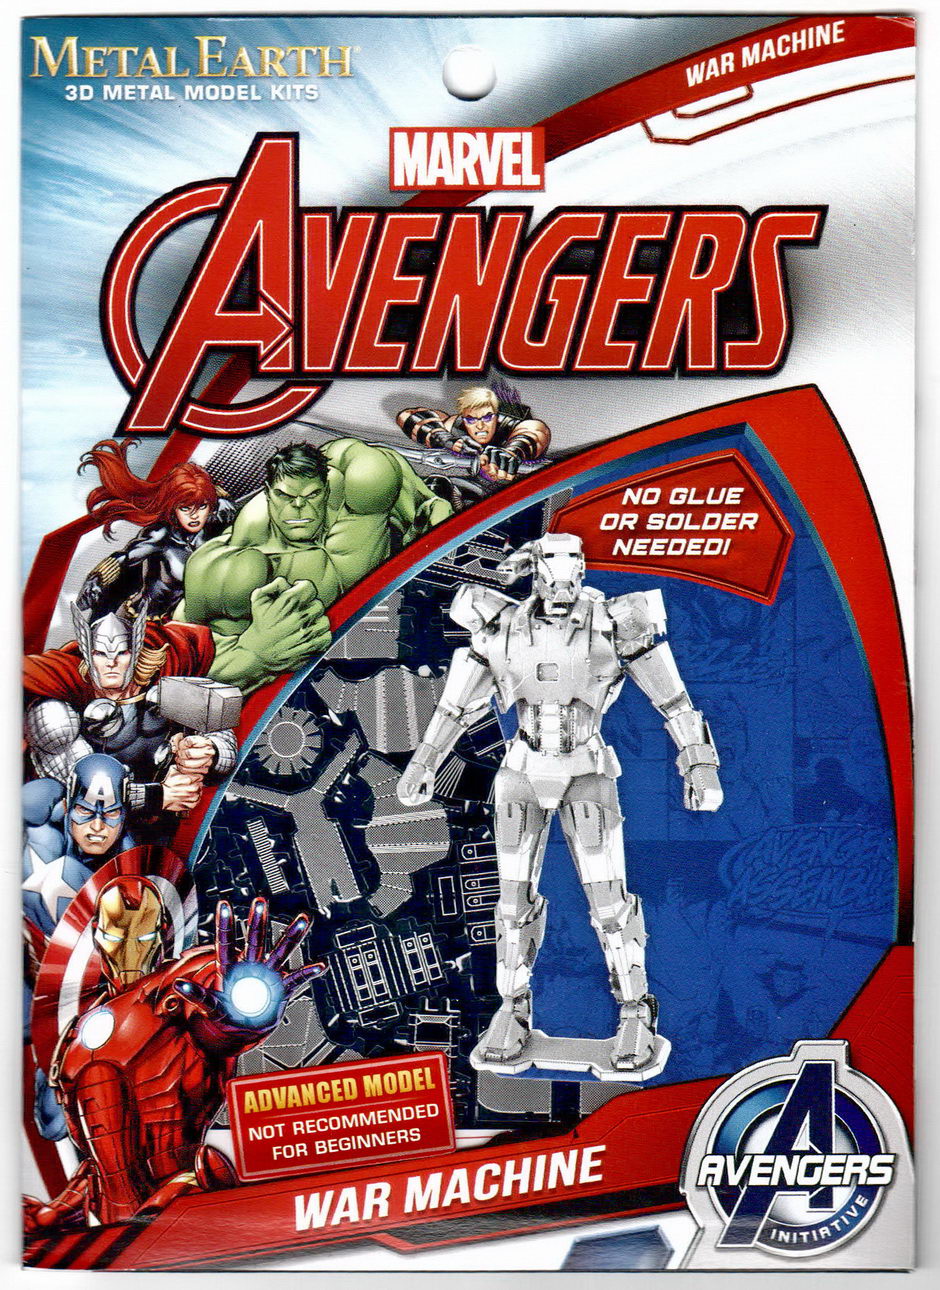 Metal Earth - War Machine - Marvel Avengers